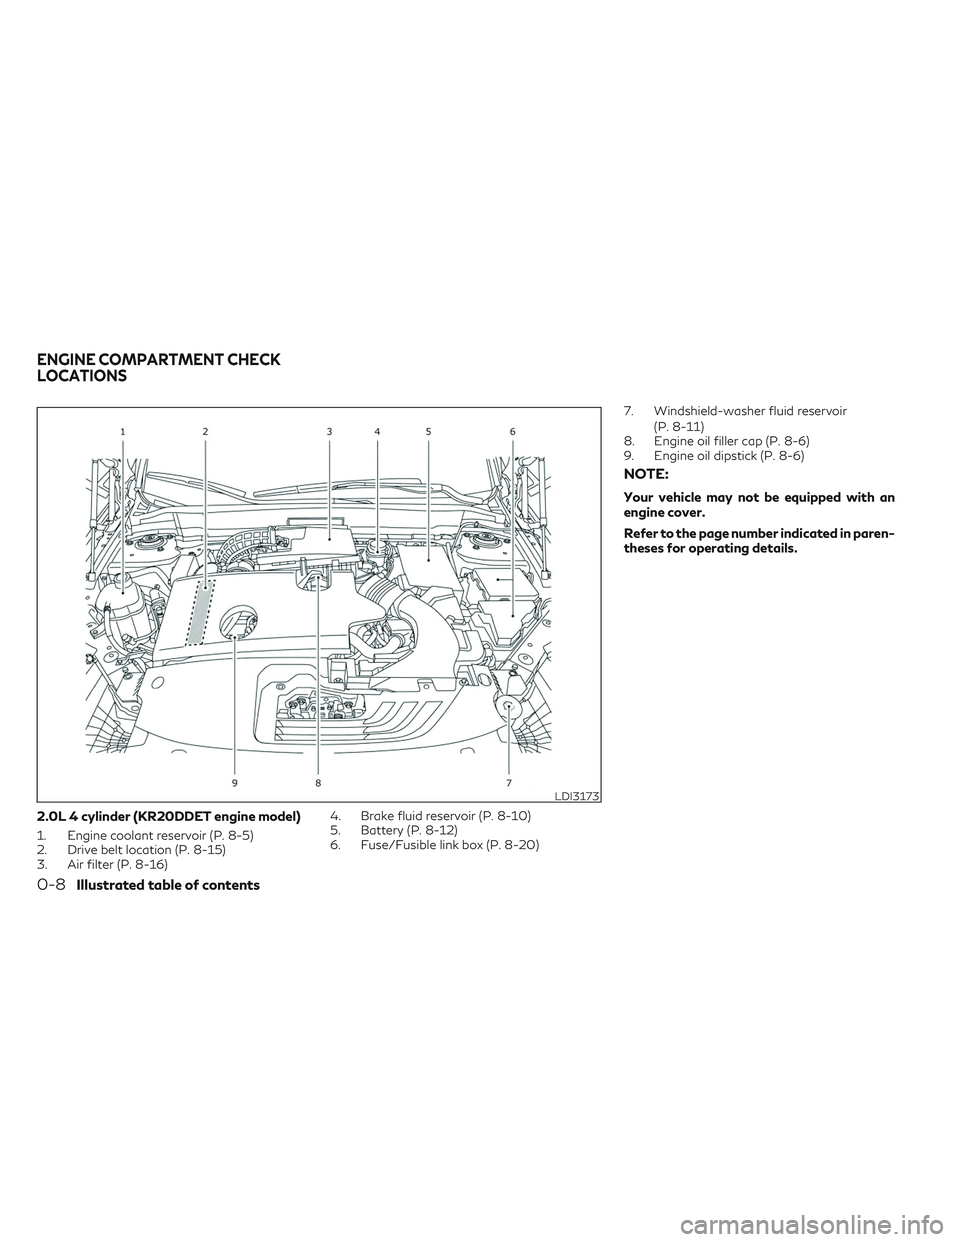 INFINITI QX50 2022  Owners Manual 2.0L 4 cylinder (KR20DDET engine model)
1. Engine coolant reservoir (P. 8-5)
2. Drive belt location (P. 8-15)
3. Air filter (P. 8-16)4. Brake fluid reservoir (P. 8-10)
5. Battery (P. 8-12)
6. Fuse/Fus